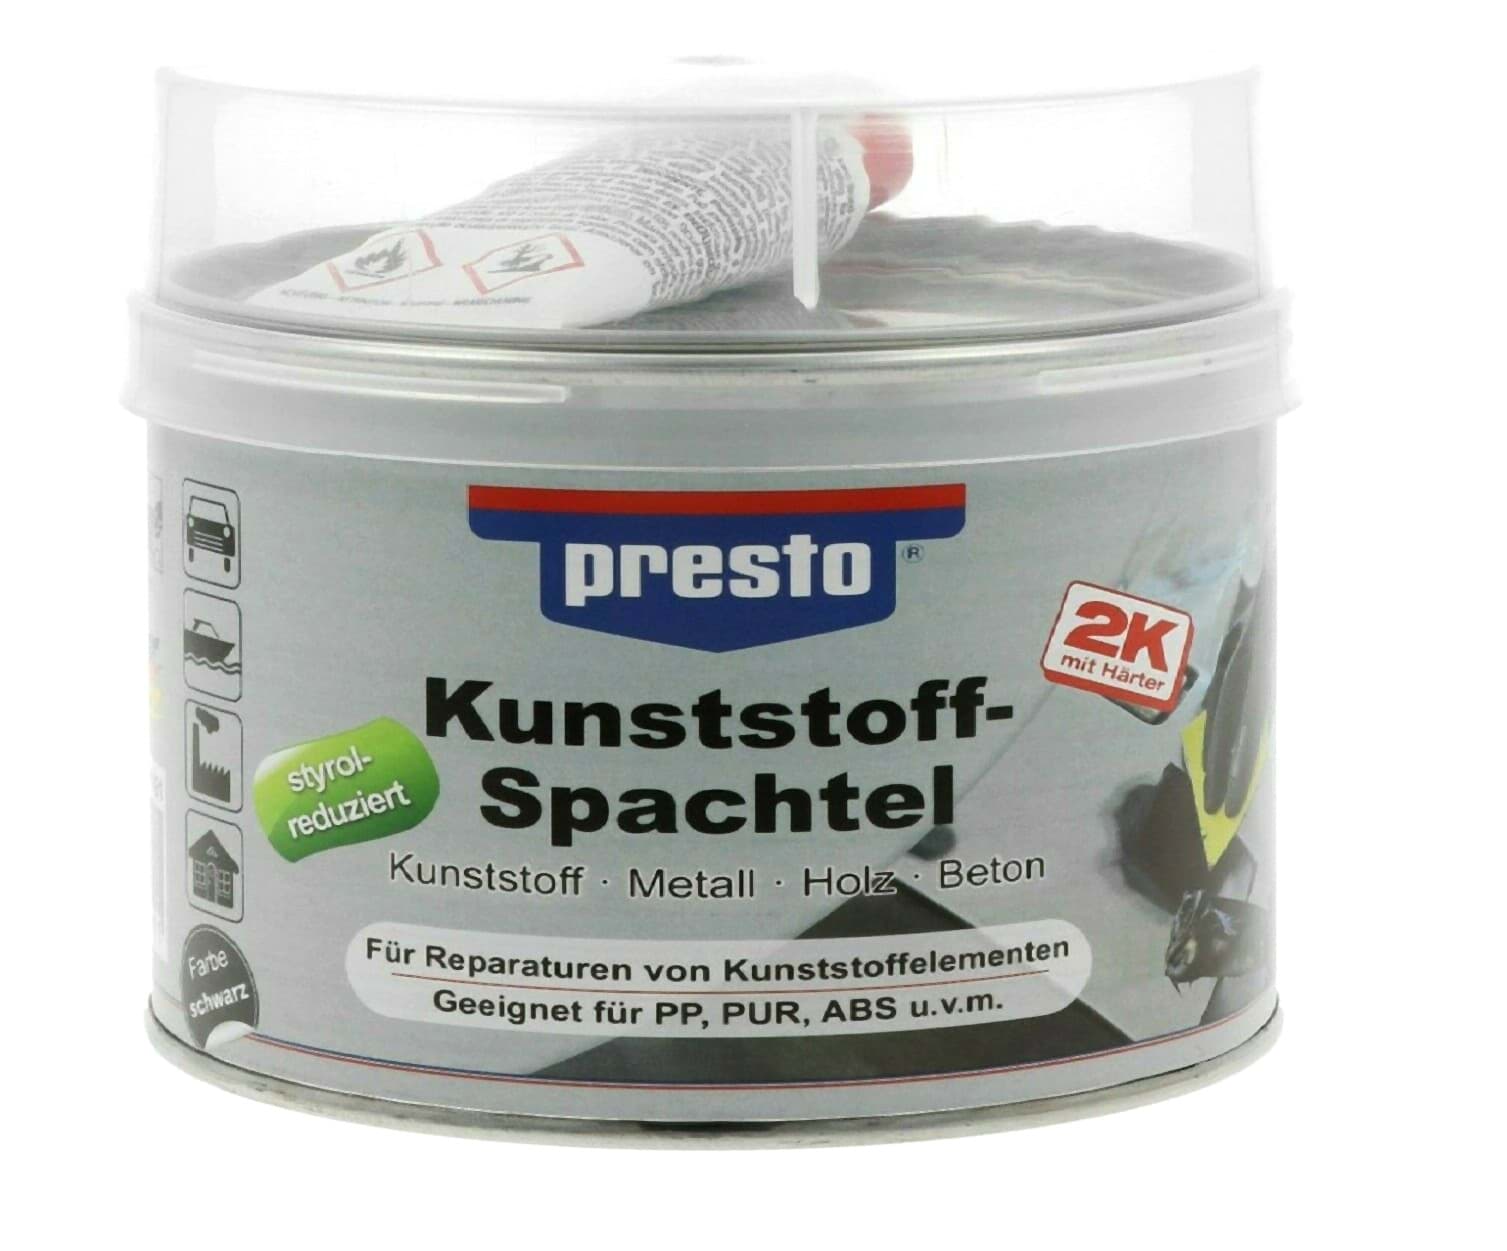 Picture of Presto Kunststoffspachtel Kunststoff Spachtel Prestolith elastic 1kg